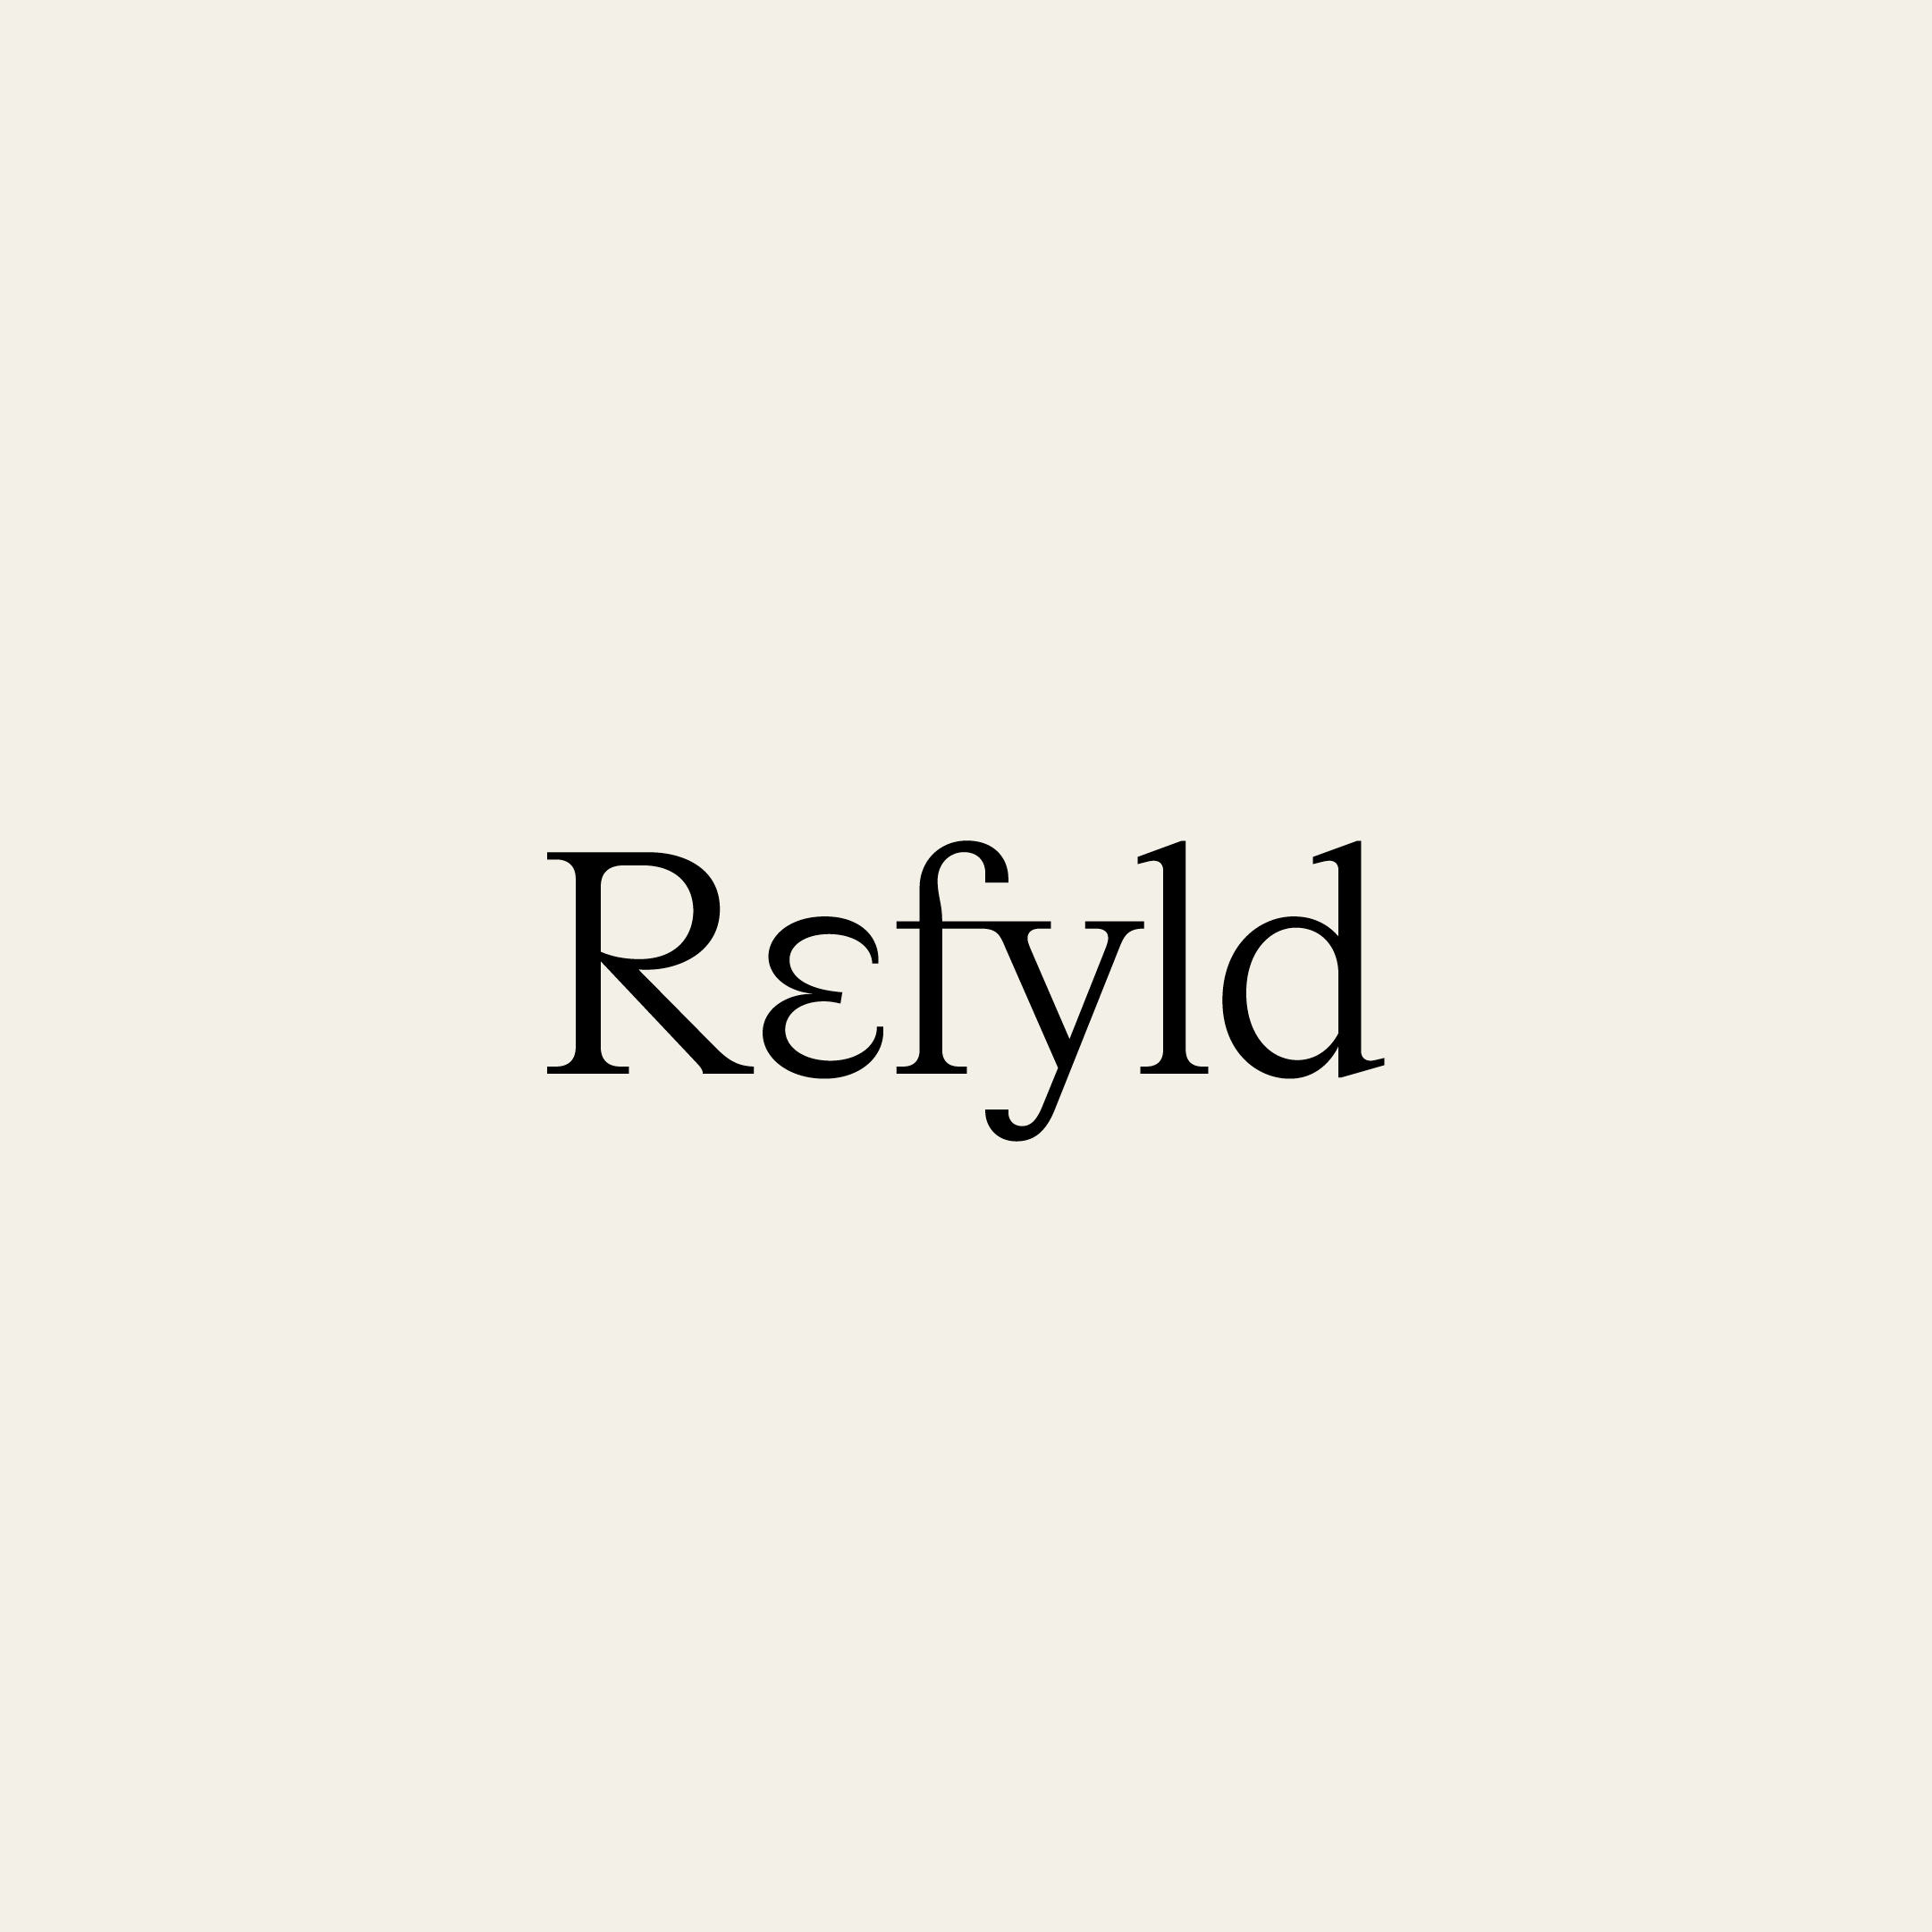 STDPCK_REFYLD_01